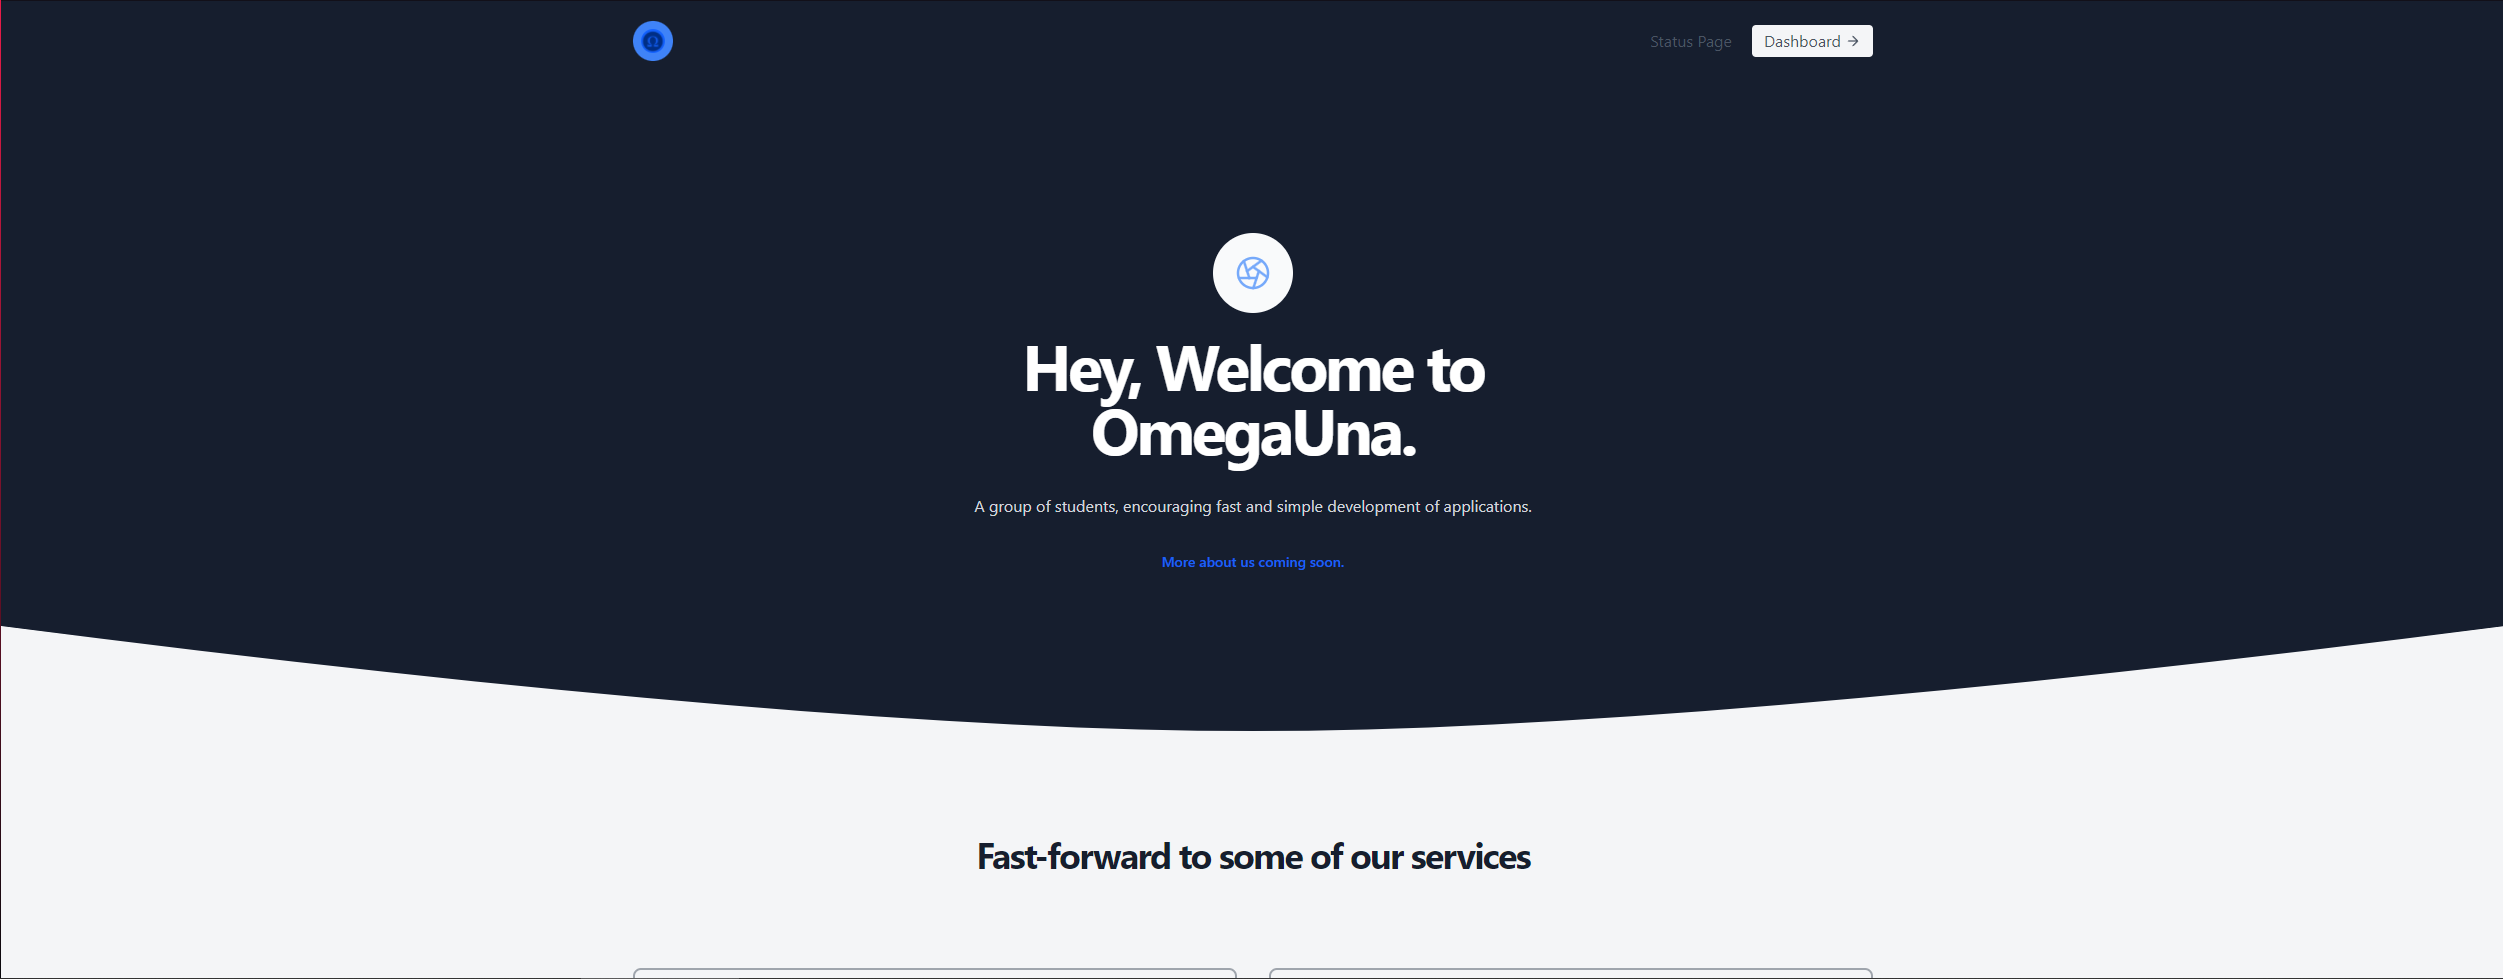 OmegaUna's homepage